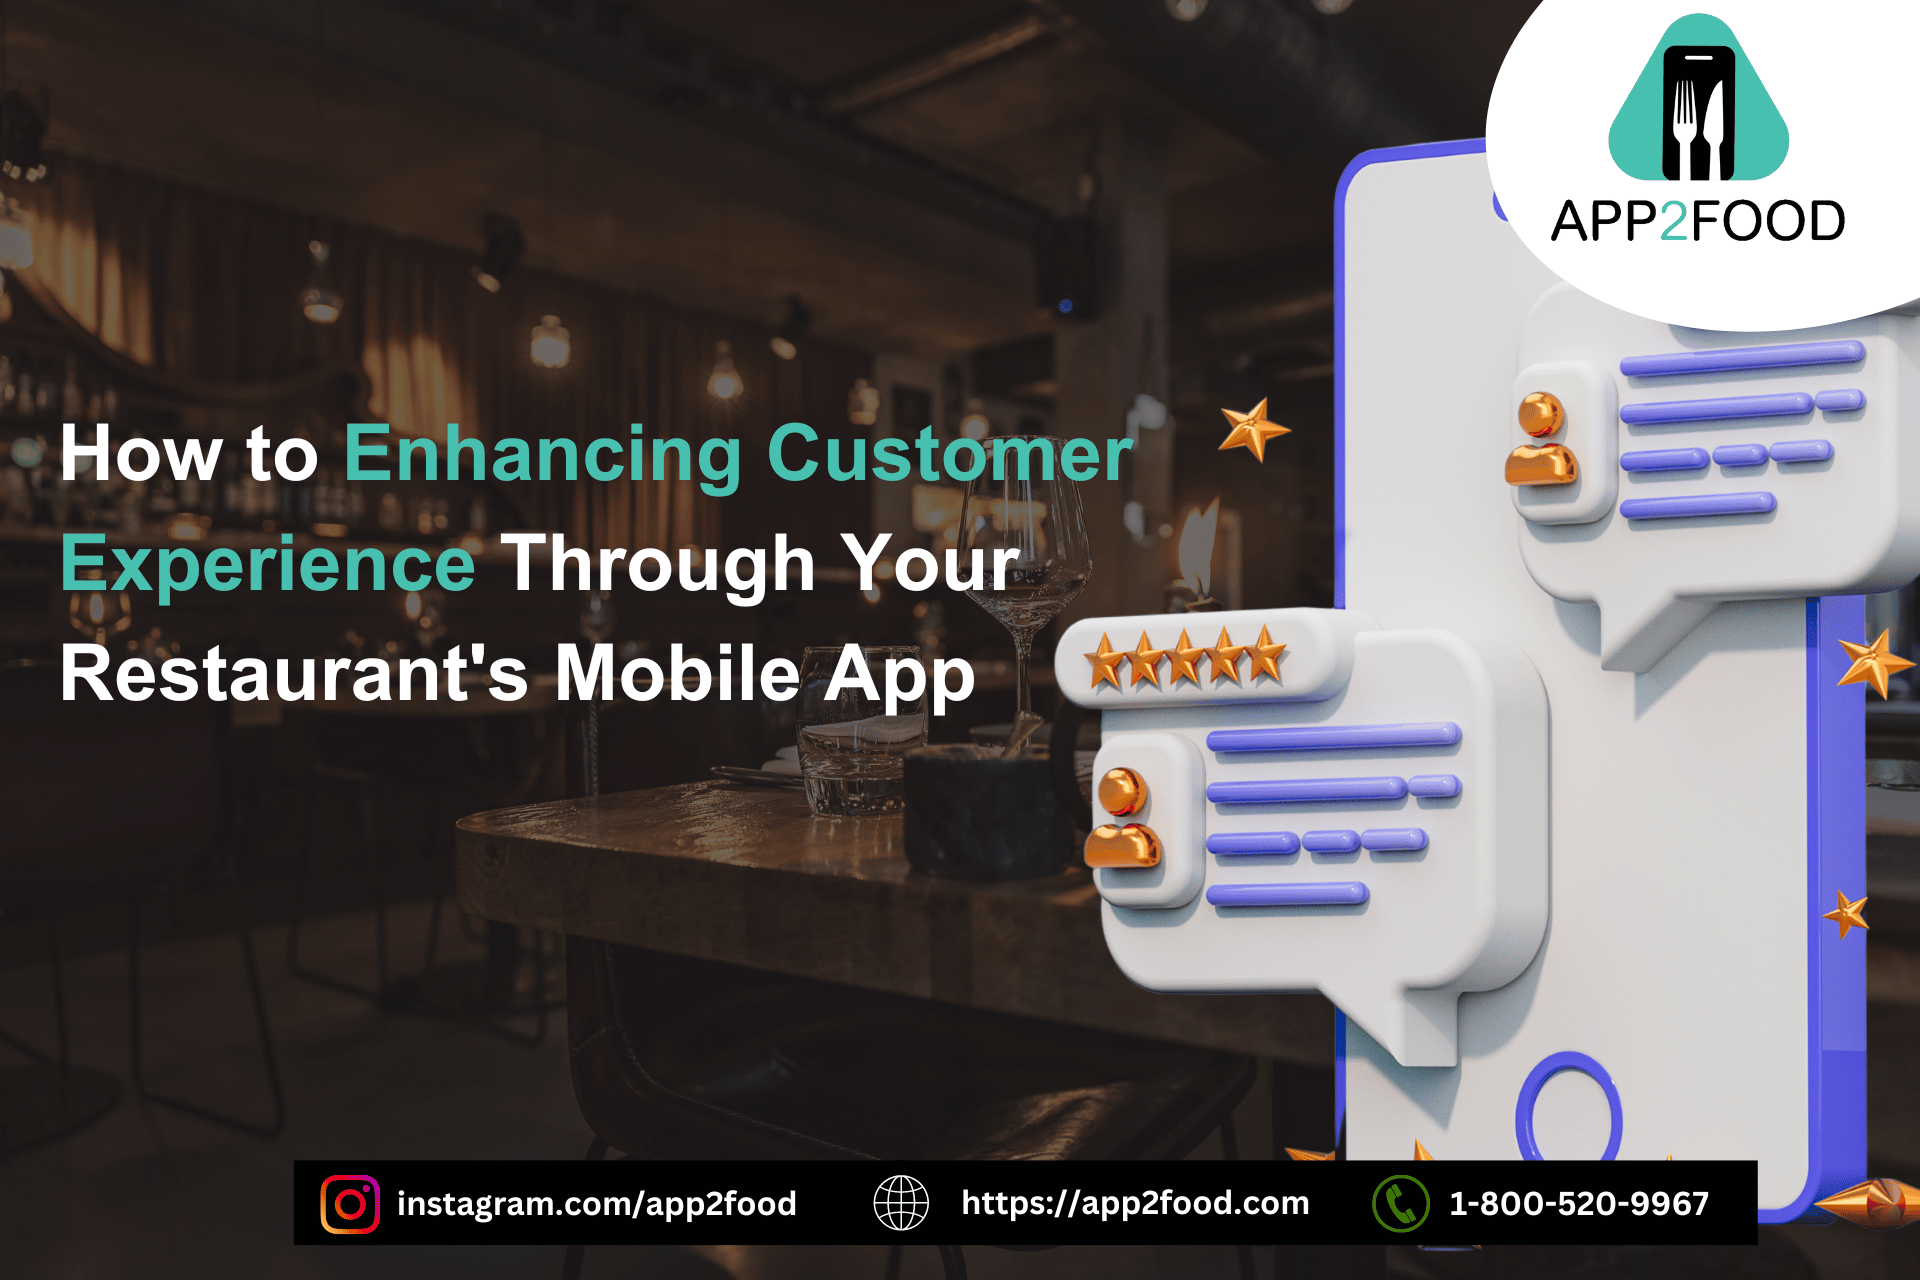 How Restaurant’s Mobile App Enhancing Customer Experience?